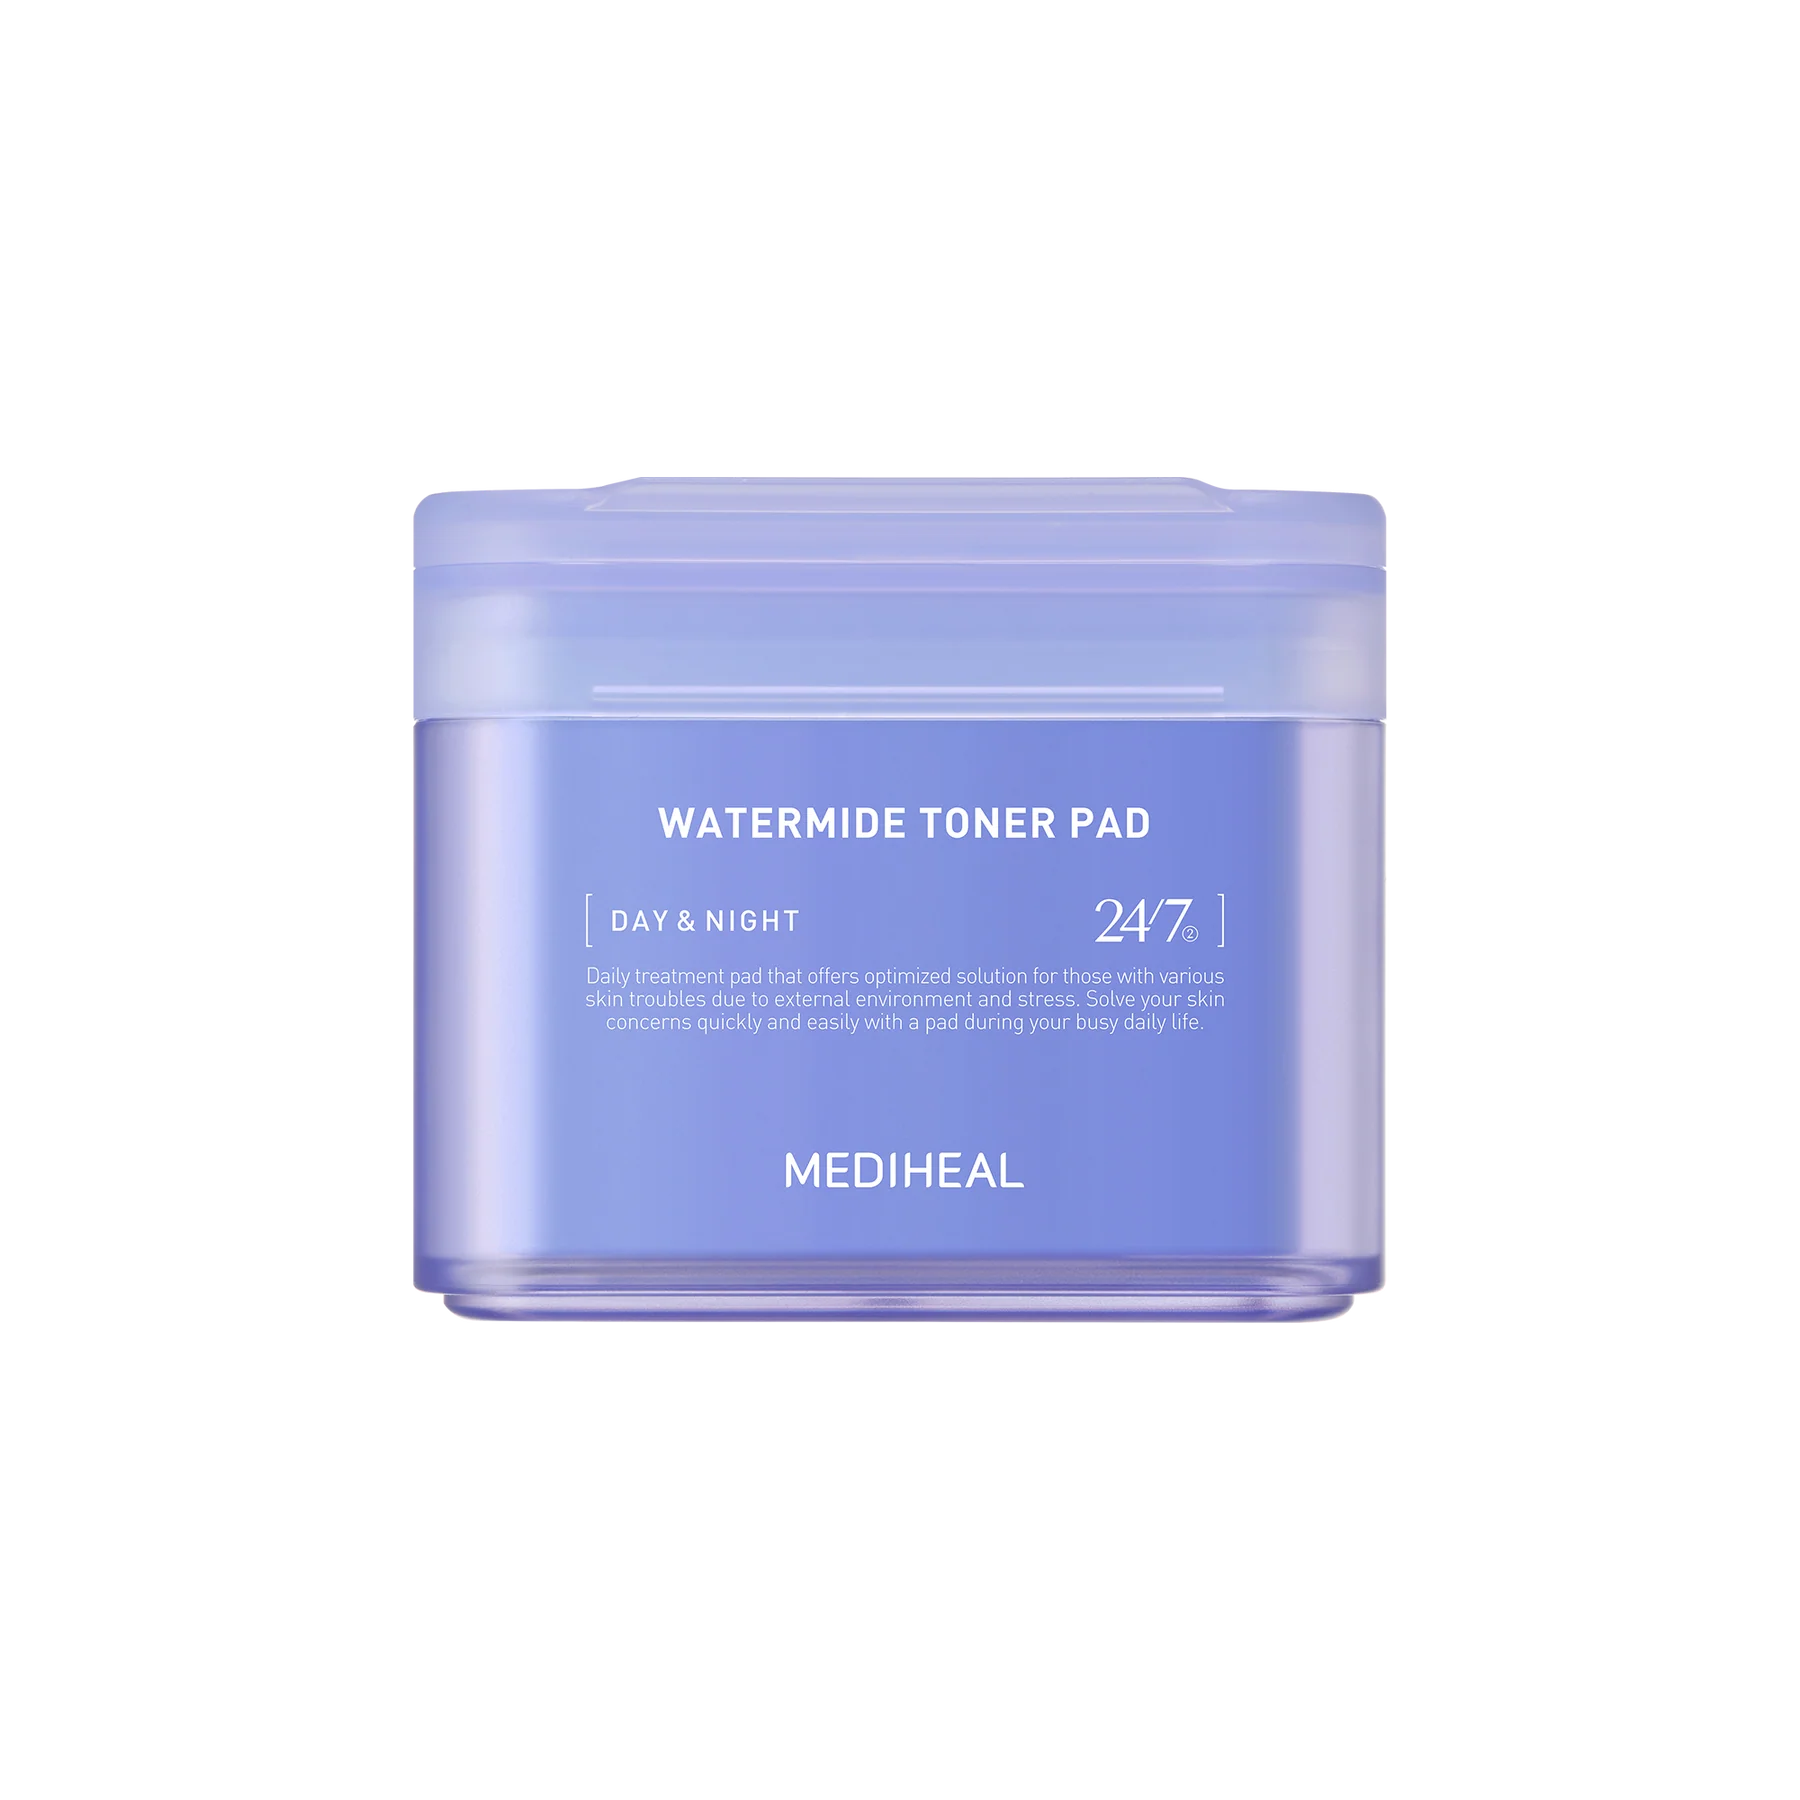 Mediheal Watermide Toner Pad Skin Care Mediheal   